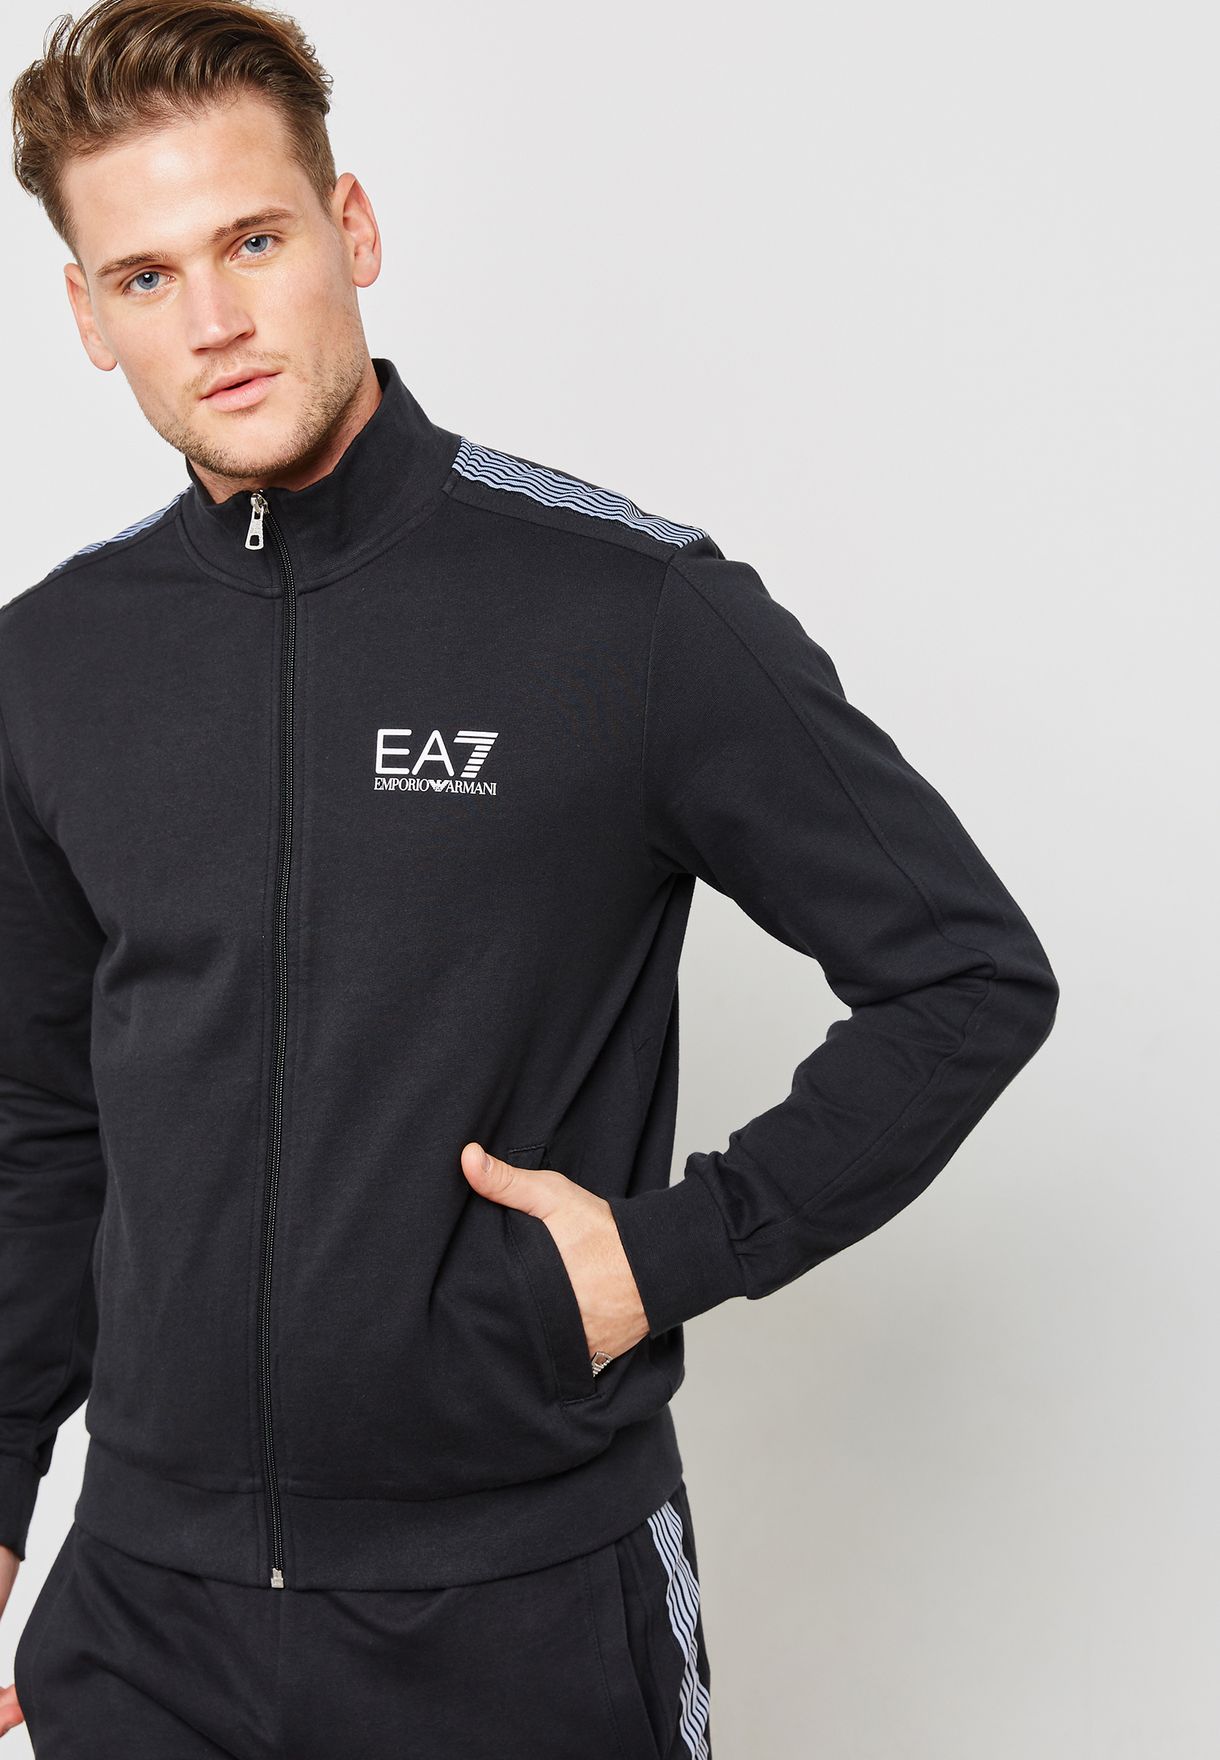 Buy Ea7 Emporio Armani black Train 7 Lines Sweatshirt & Sweatpants for  Men in MENA, Worldwide